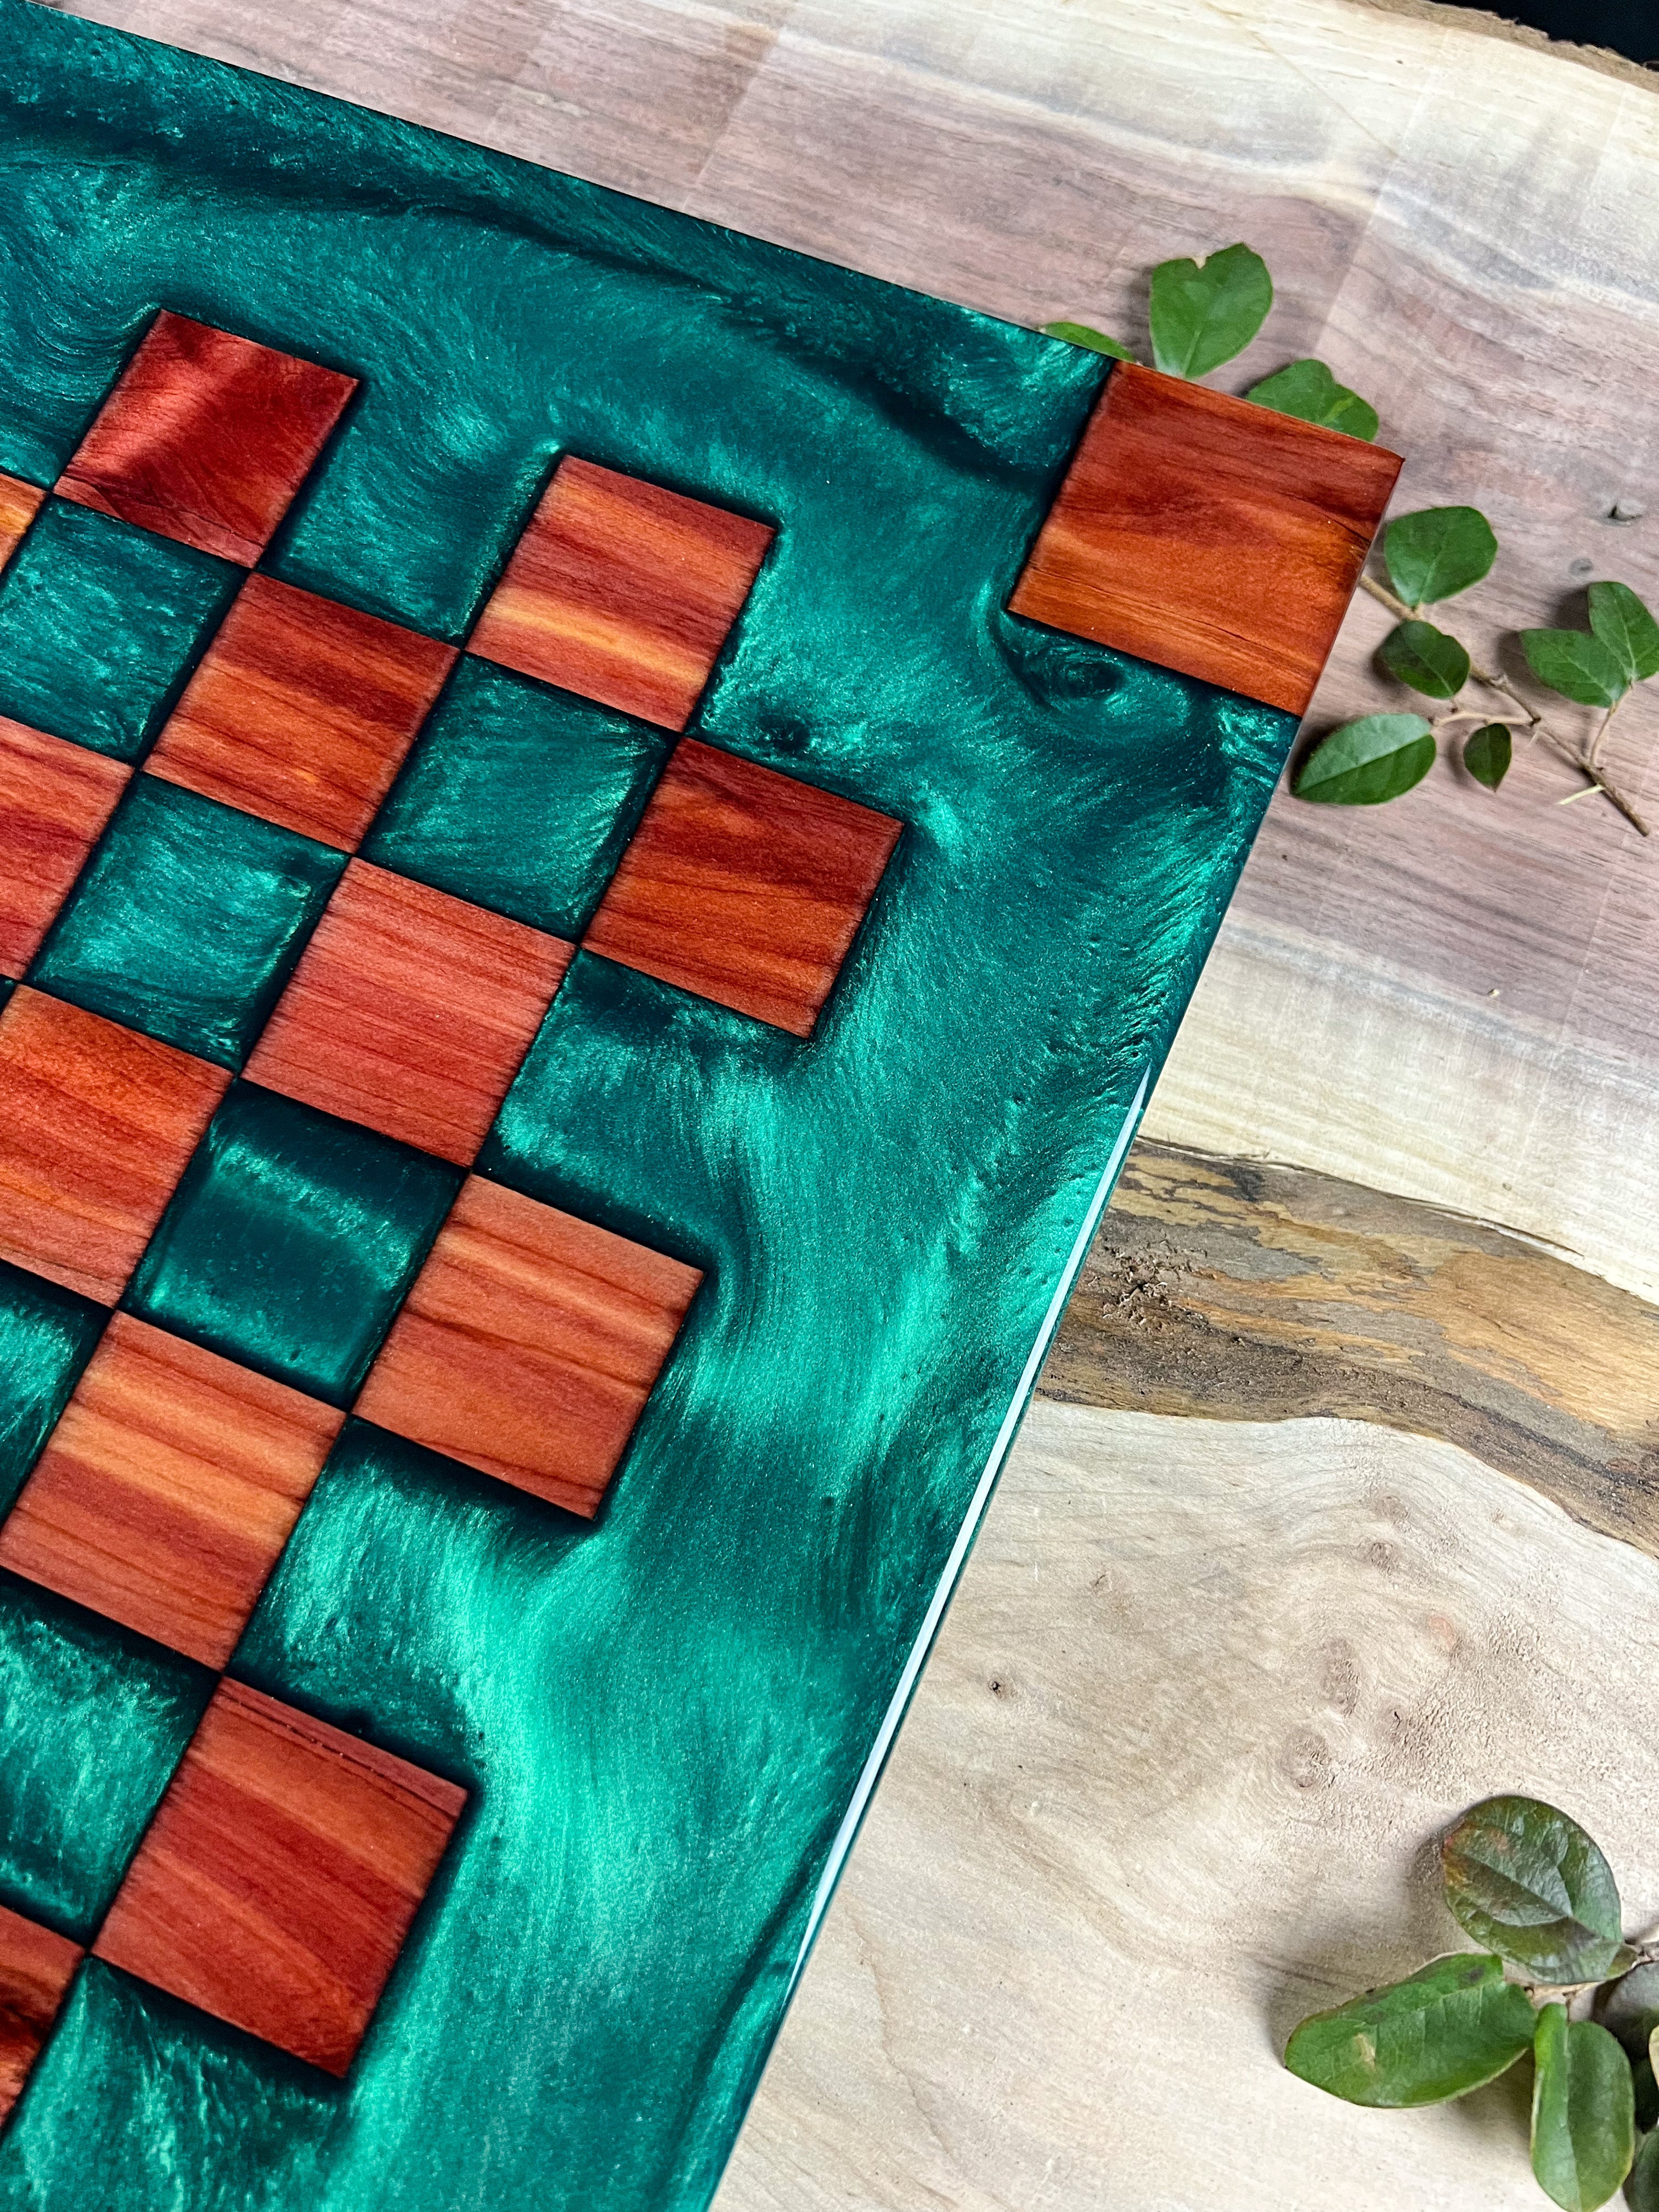 Aromatic Cedar Emerald Green Chess Board